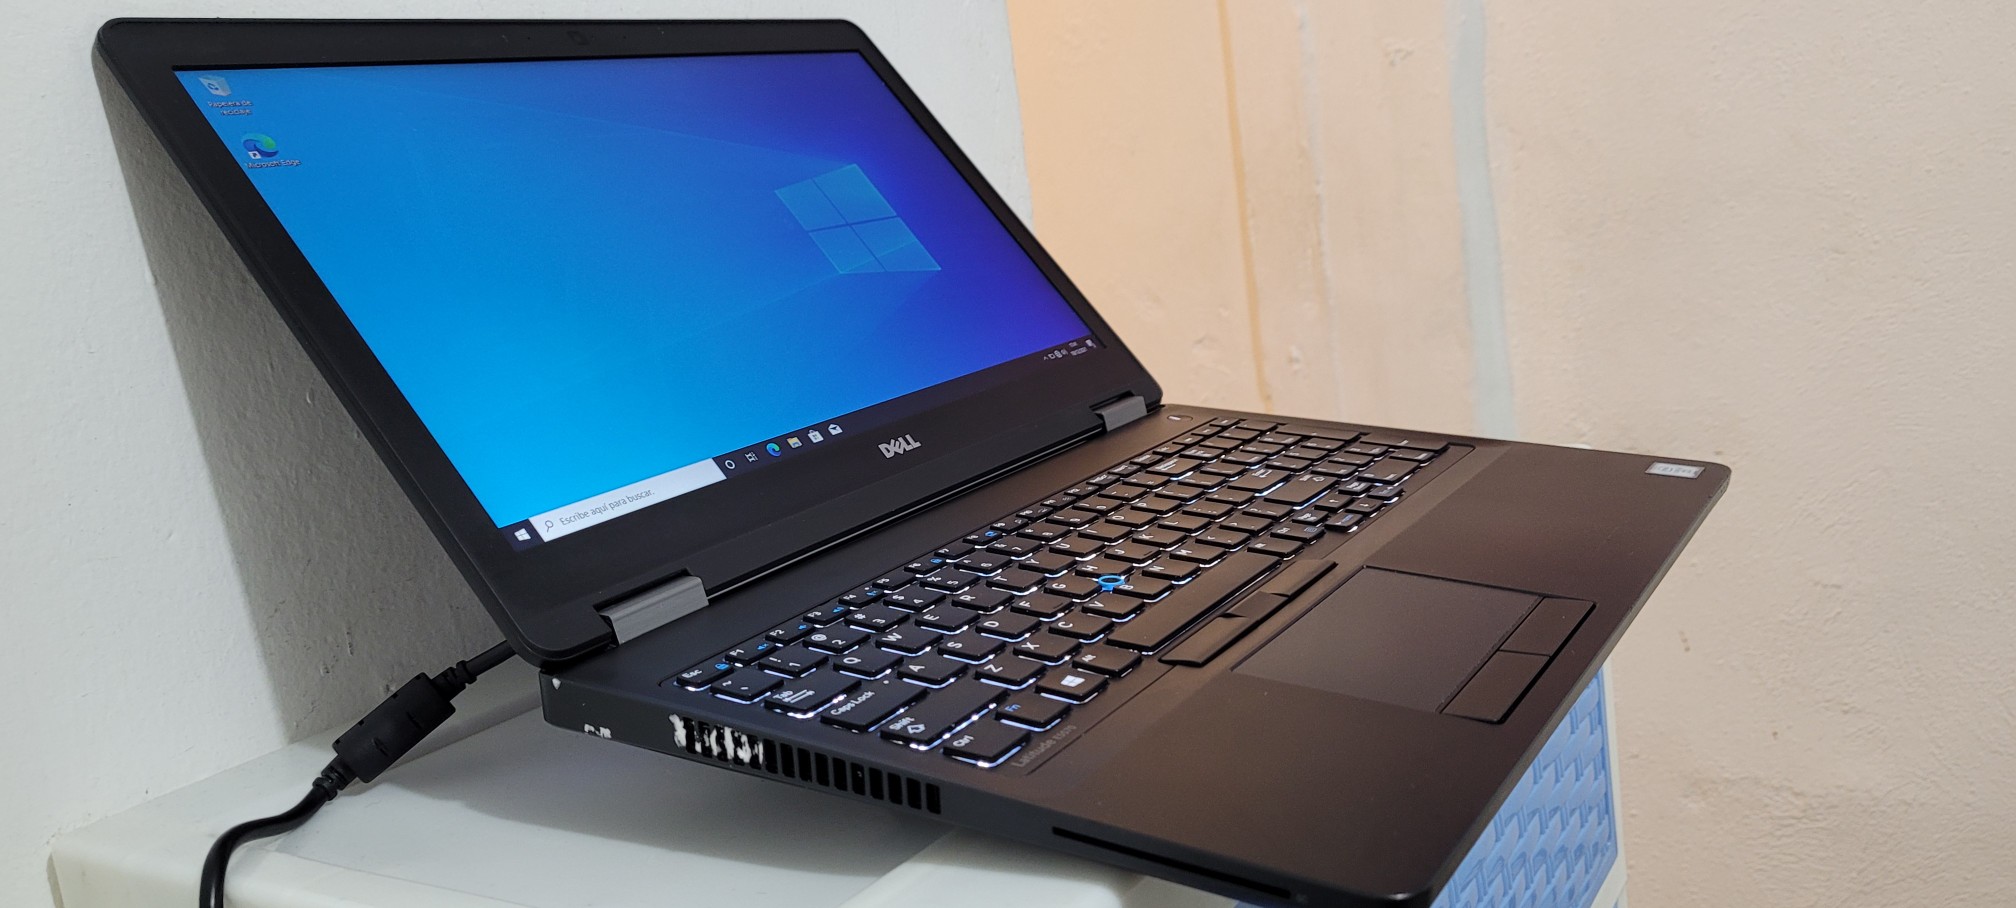 computadoras y laptops - Dell 5570 17 Pulg Core i7 6ta Ram 16gb ddr4 SSD 512GB Video 8gb full 1